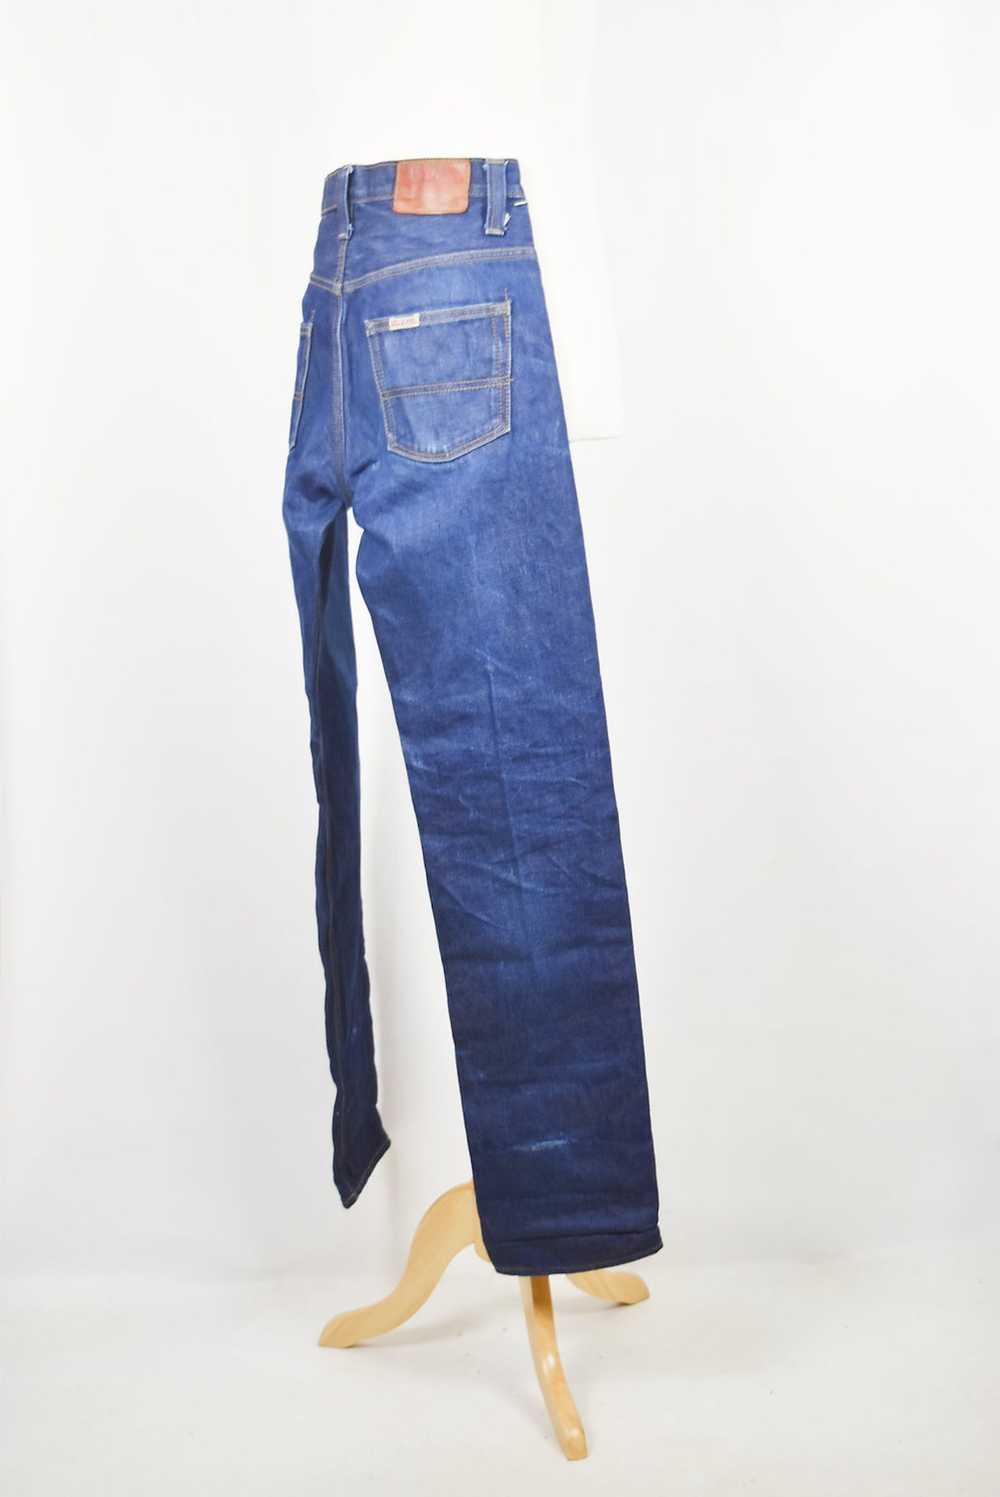 Big John Jeans - image 5